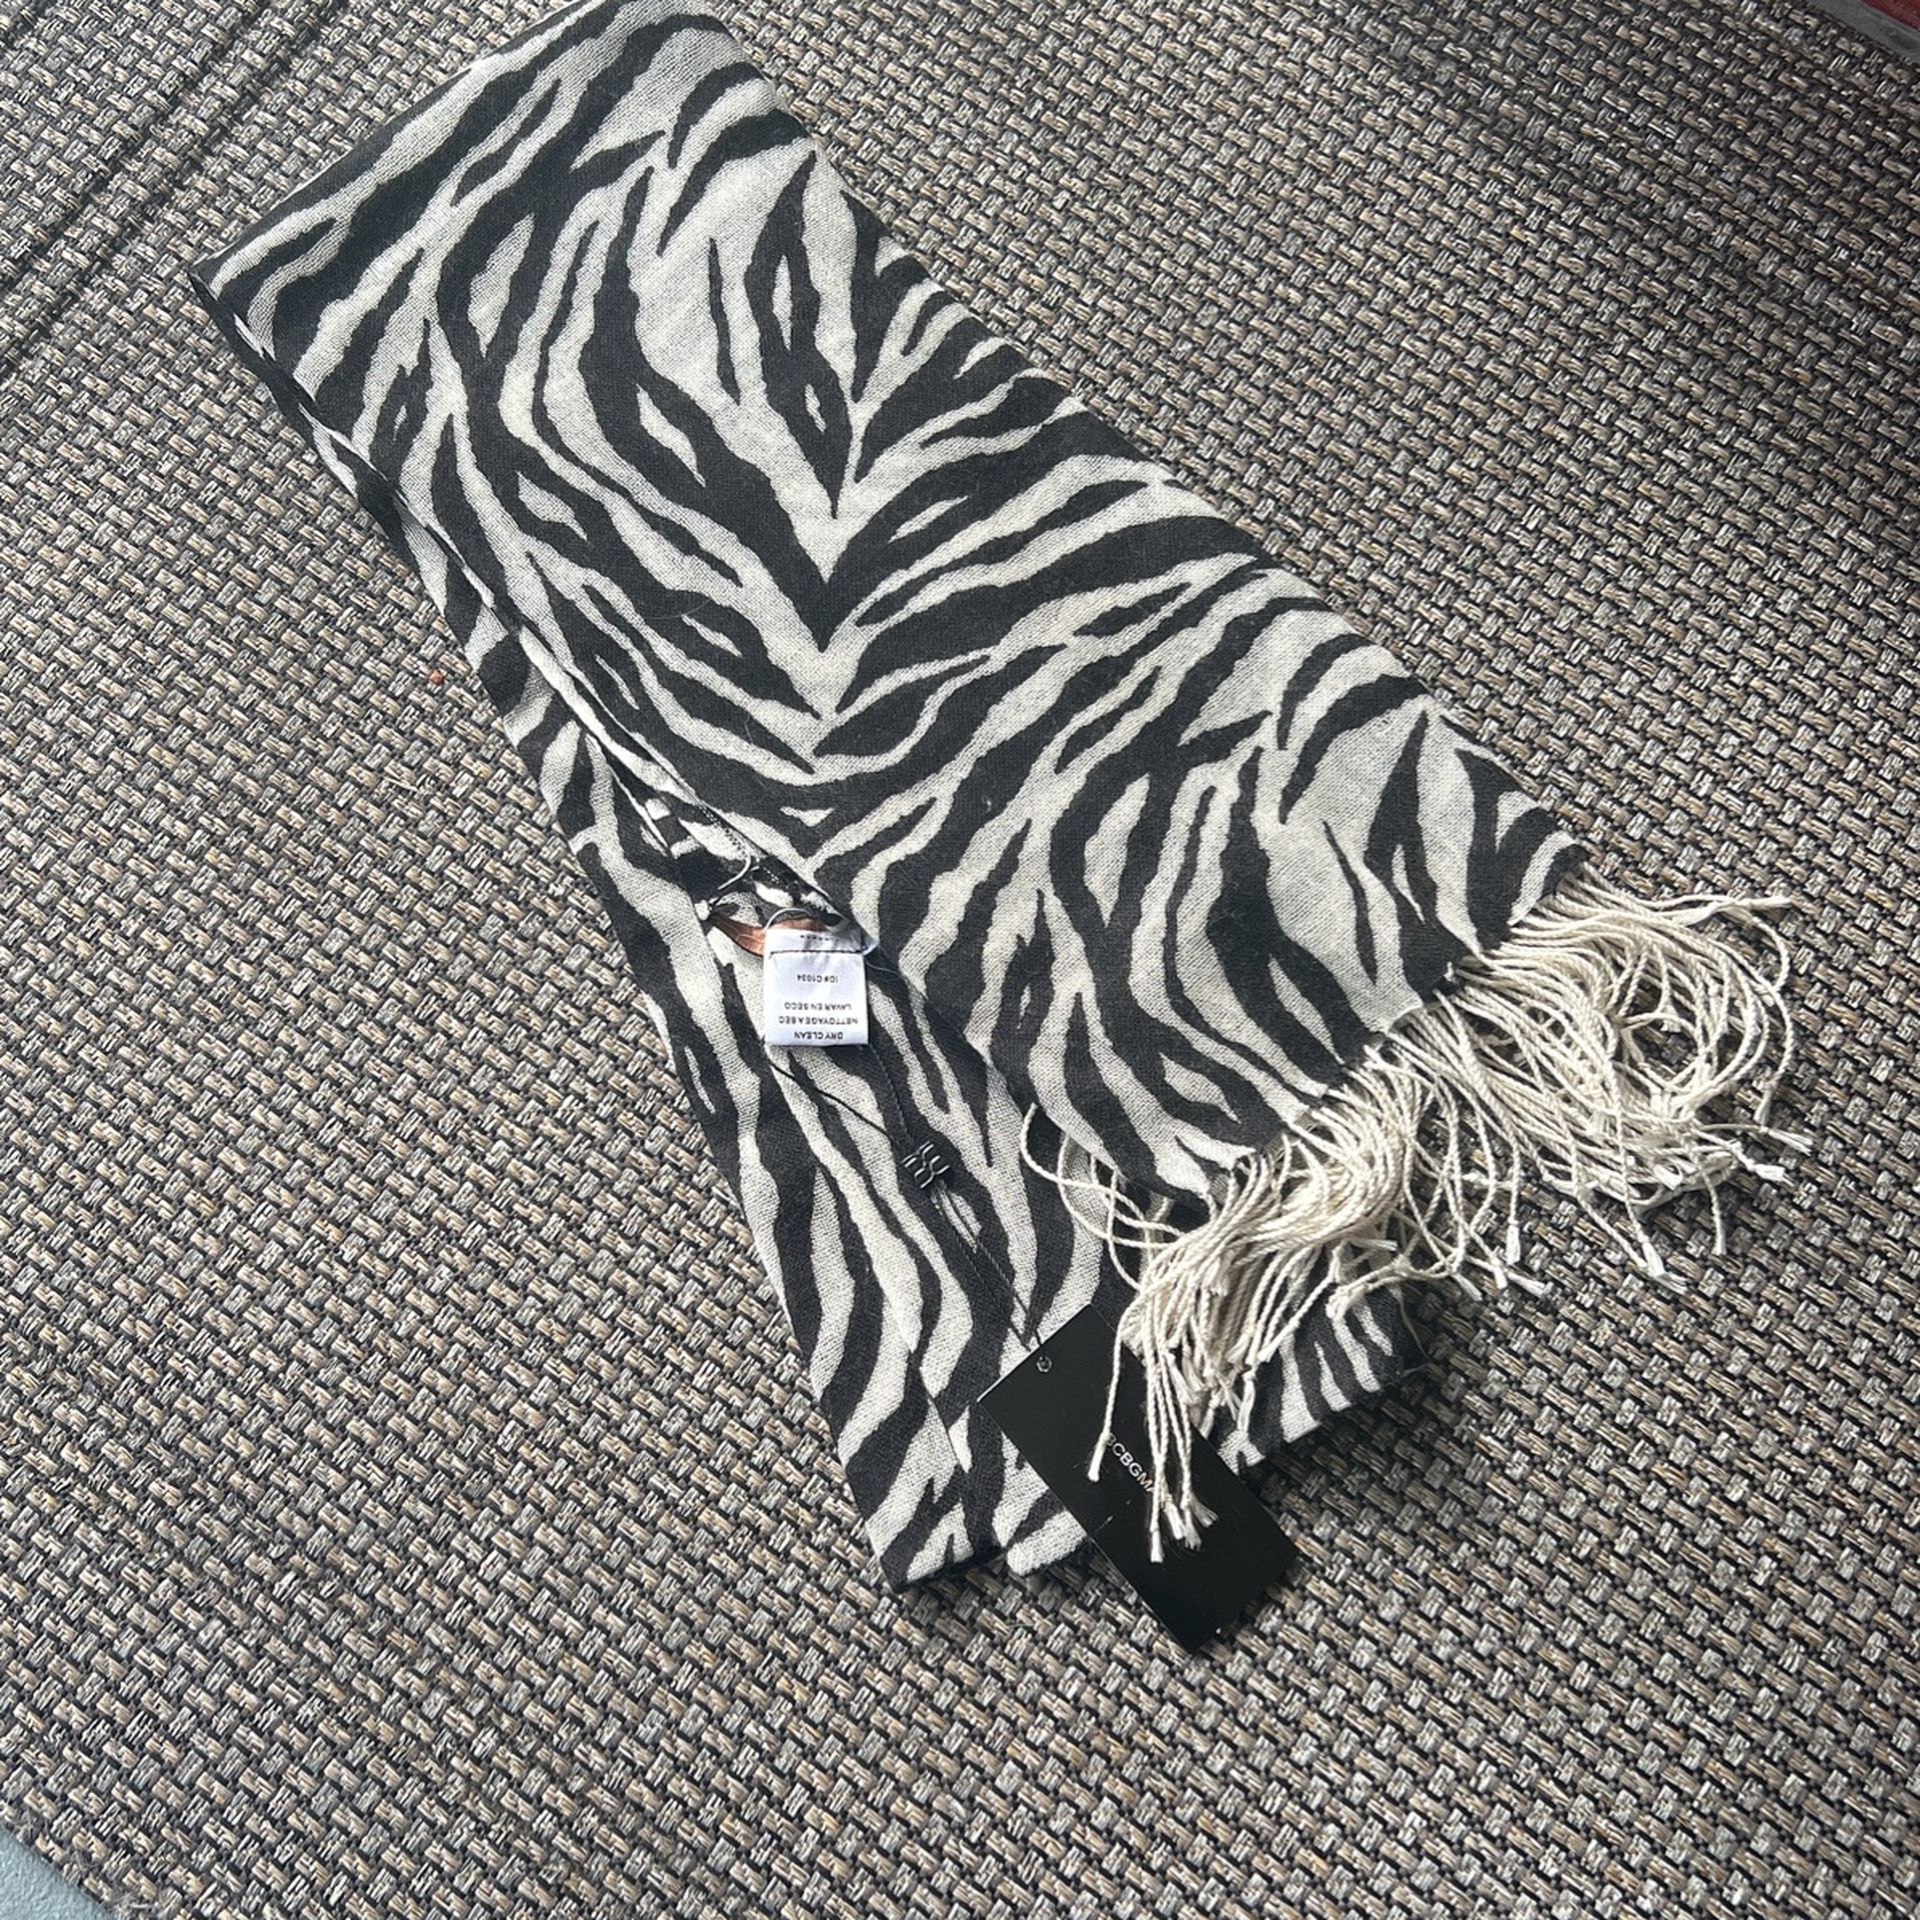 BCBGMaxAzria Zebra Wool Cashmere Blend Scarf in Ivory and Black Zebra Print